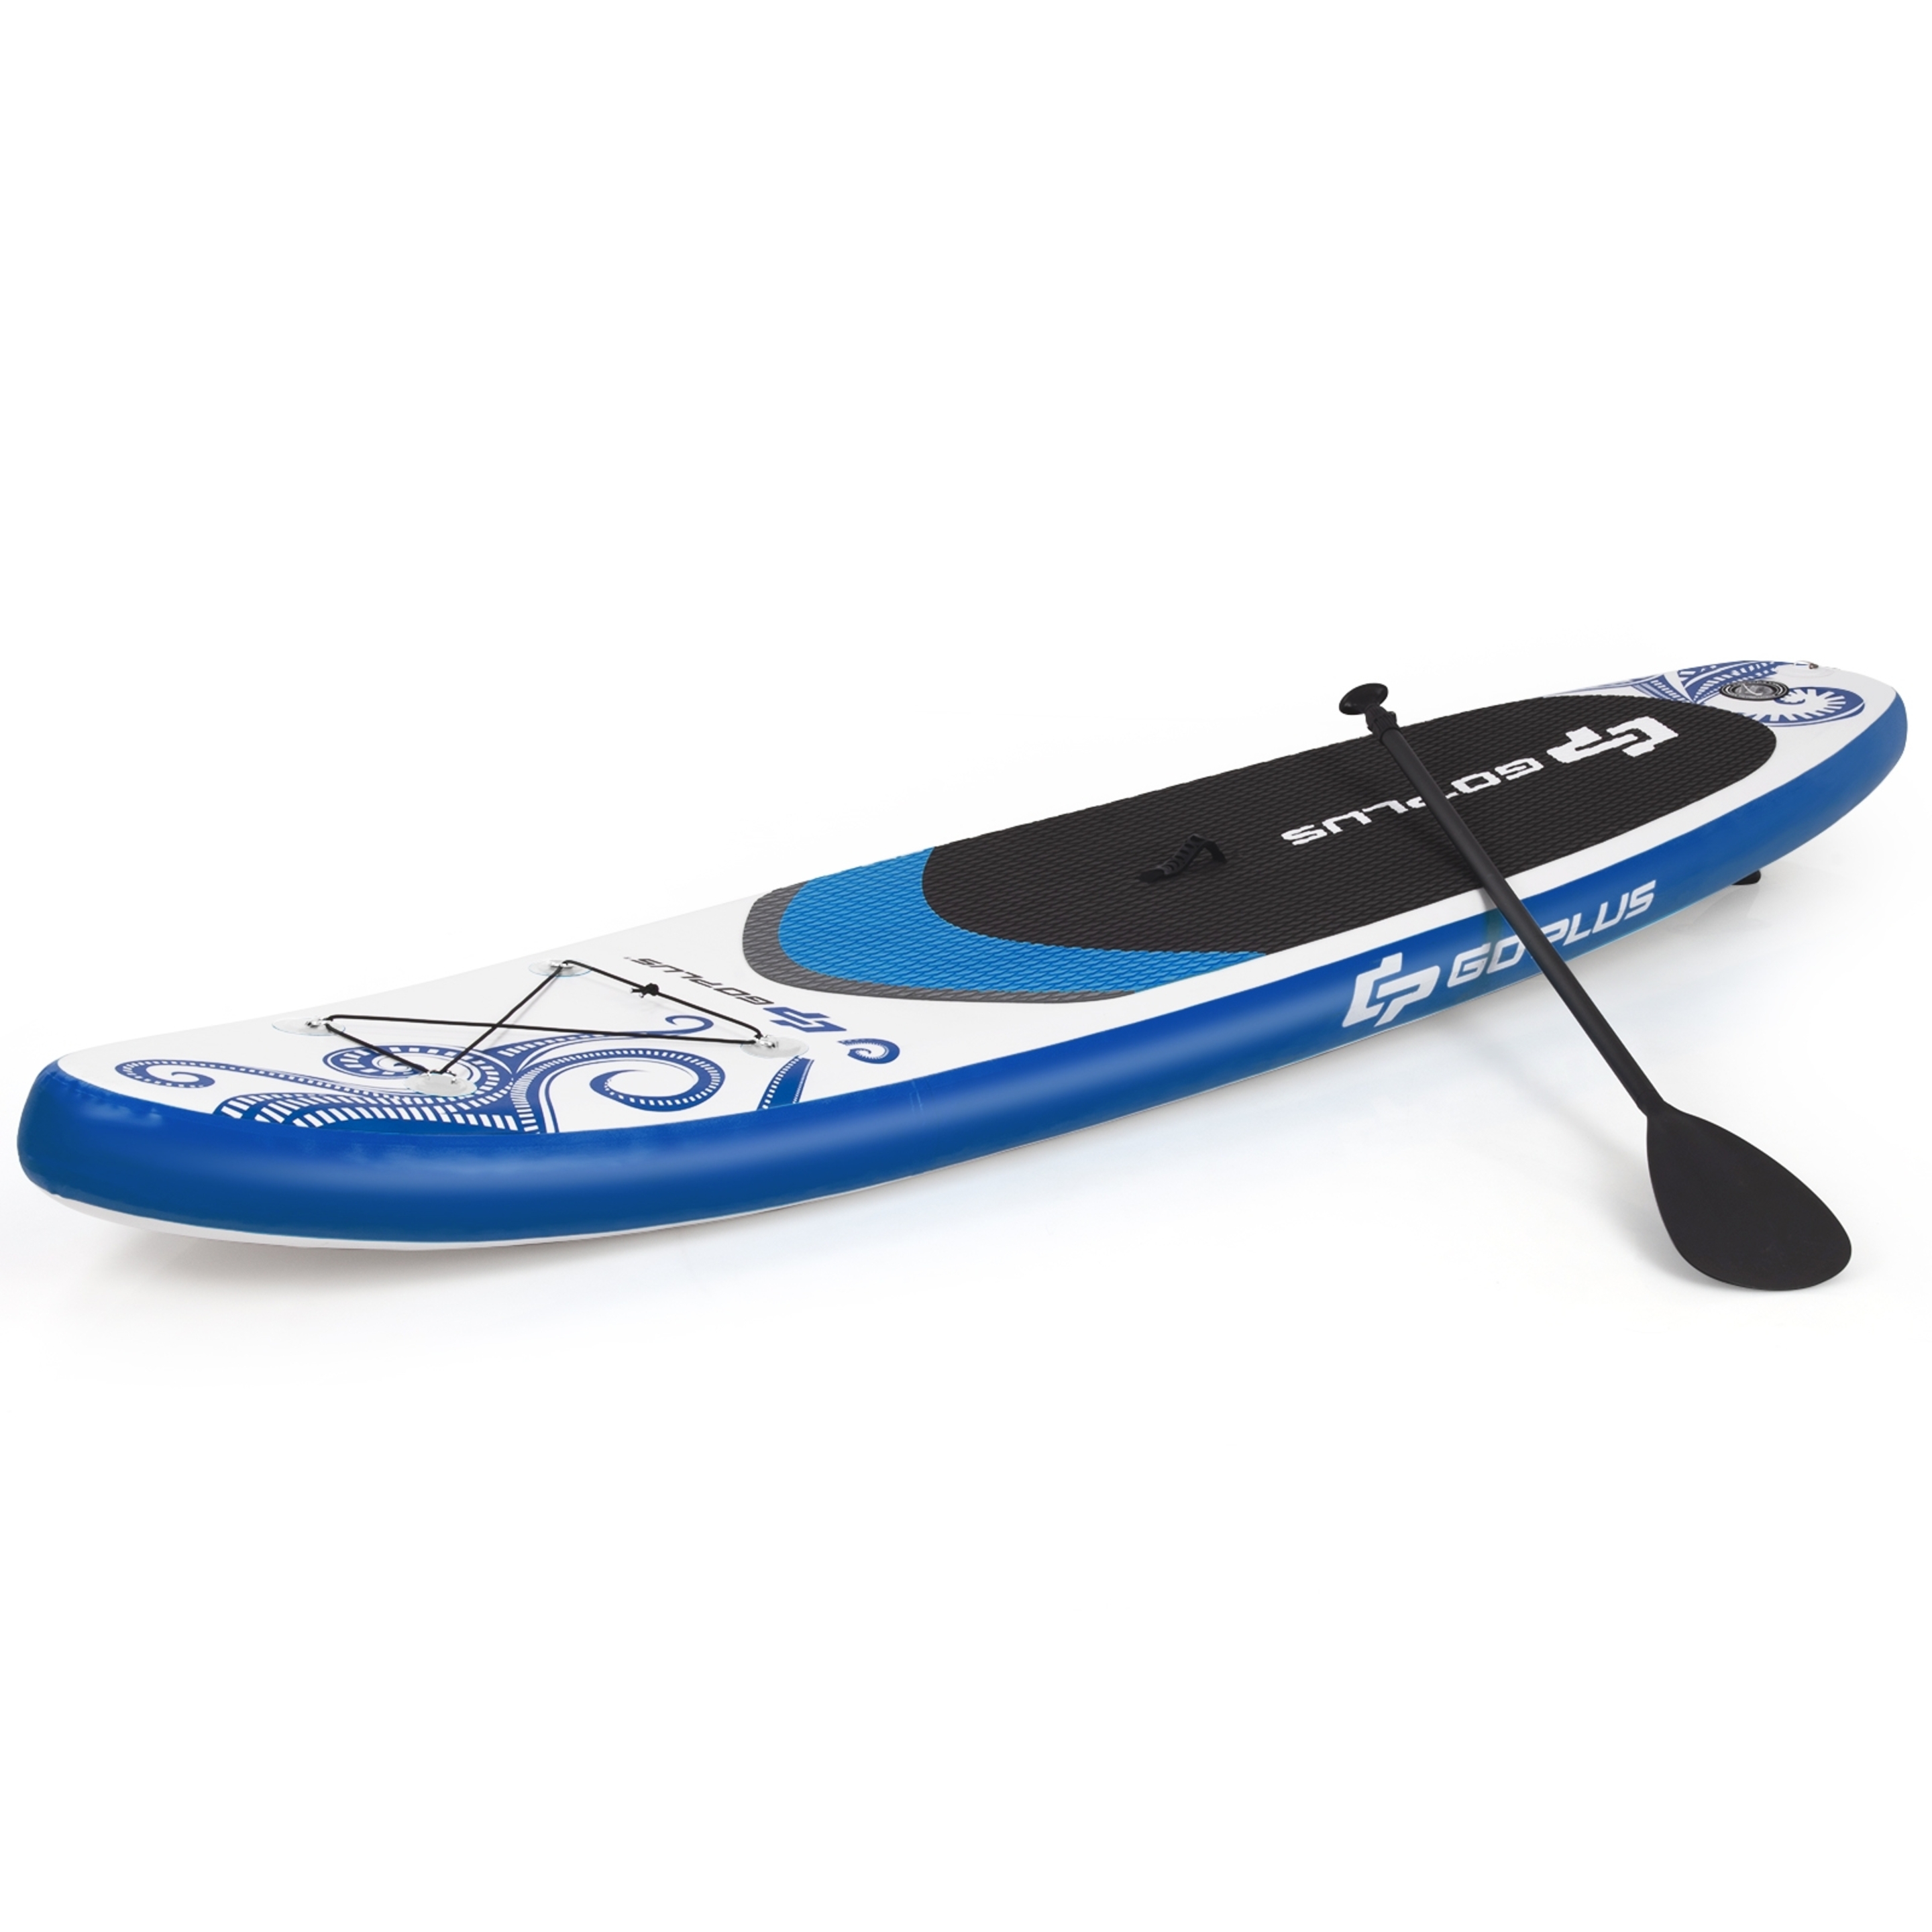 Tabla Inflable De Paddle Sup Costway - azul-blanco - 